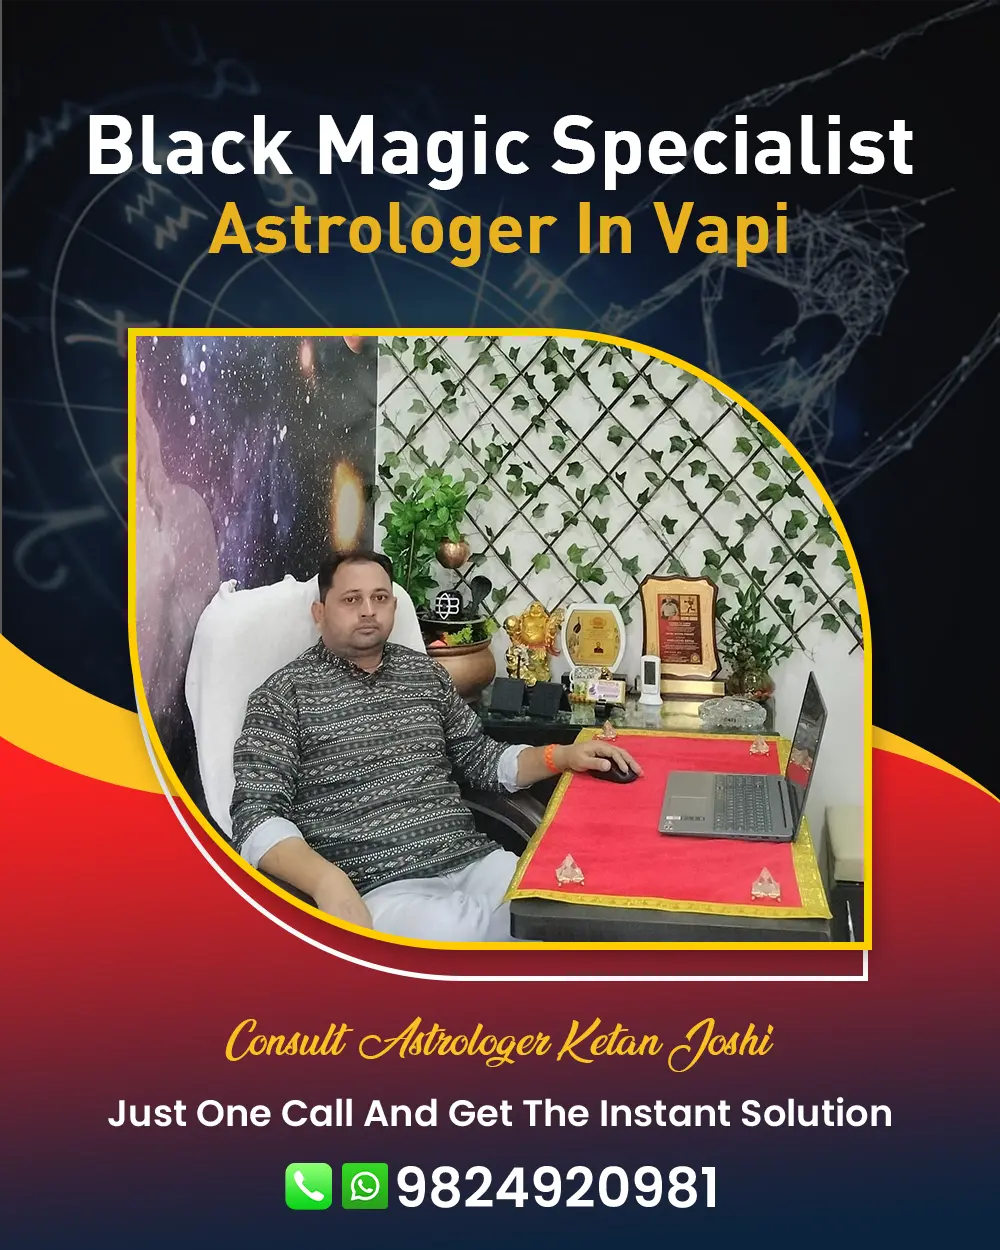 Black Magic Specialist Astrologer In Vapi